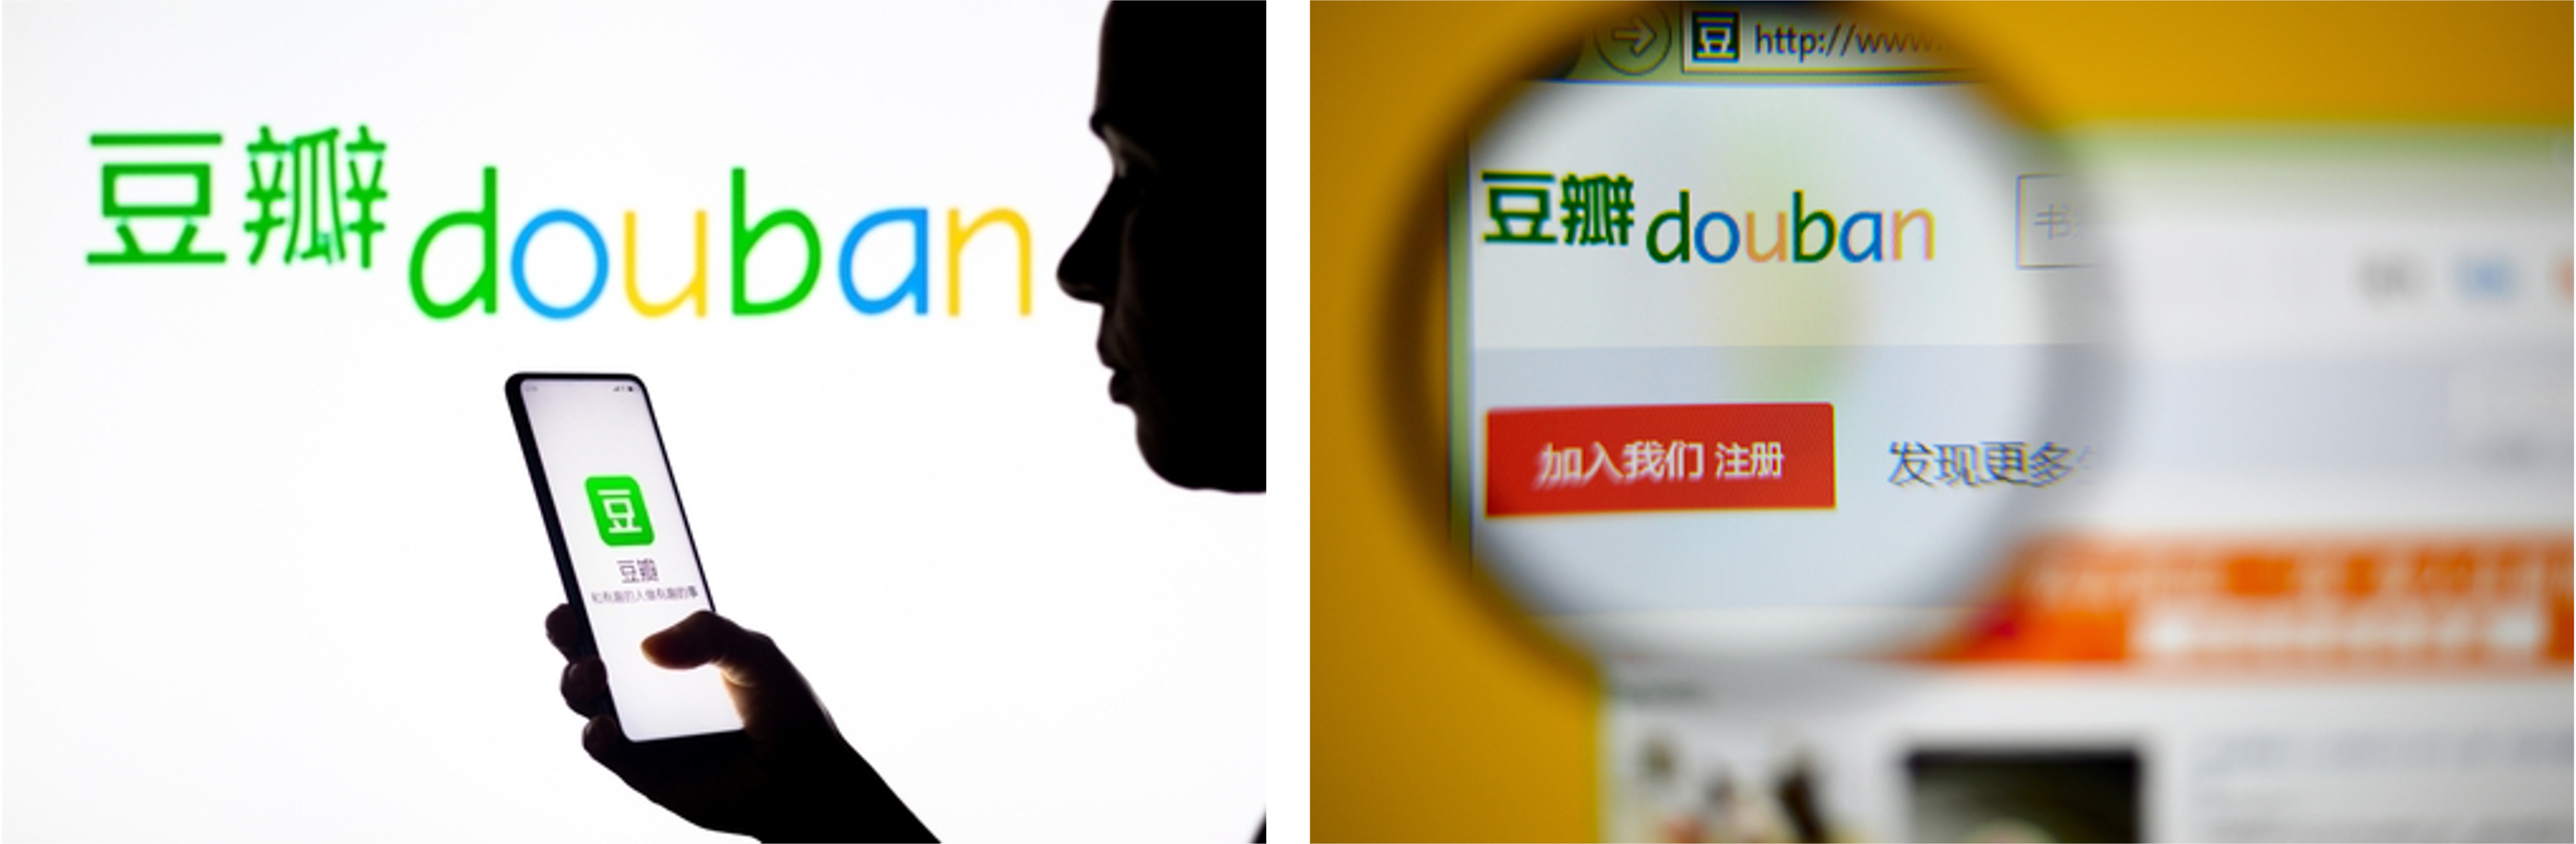 social media platforms & APPs in China: Douban